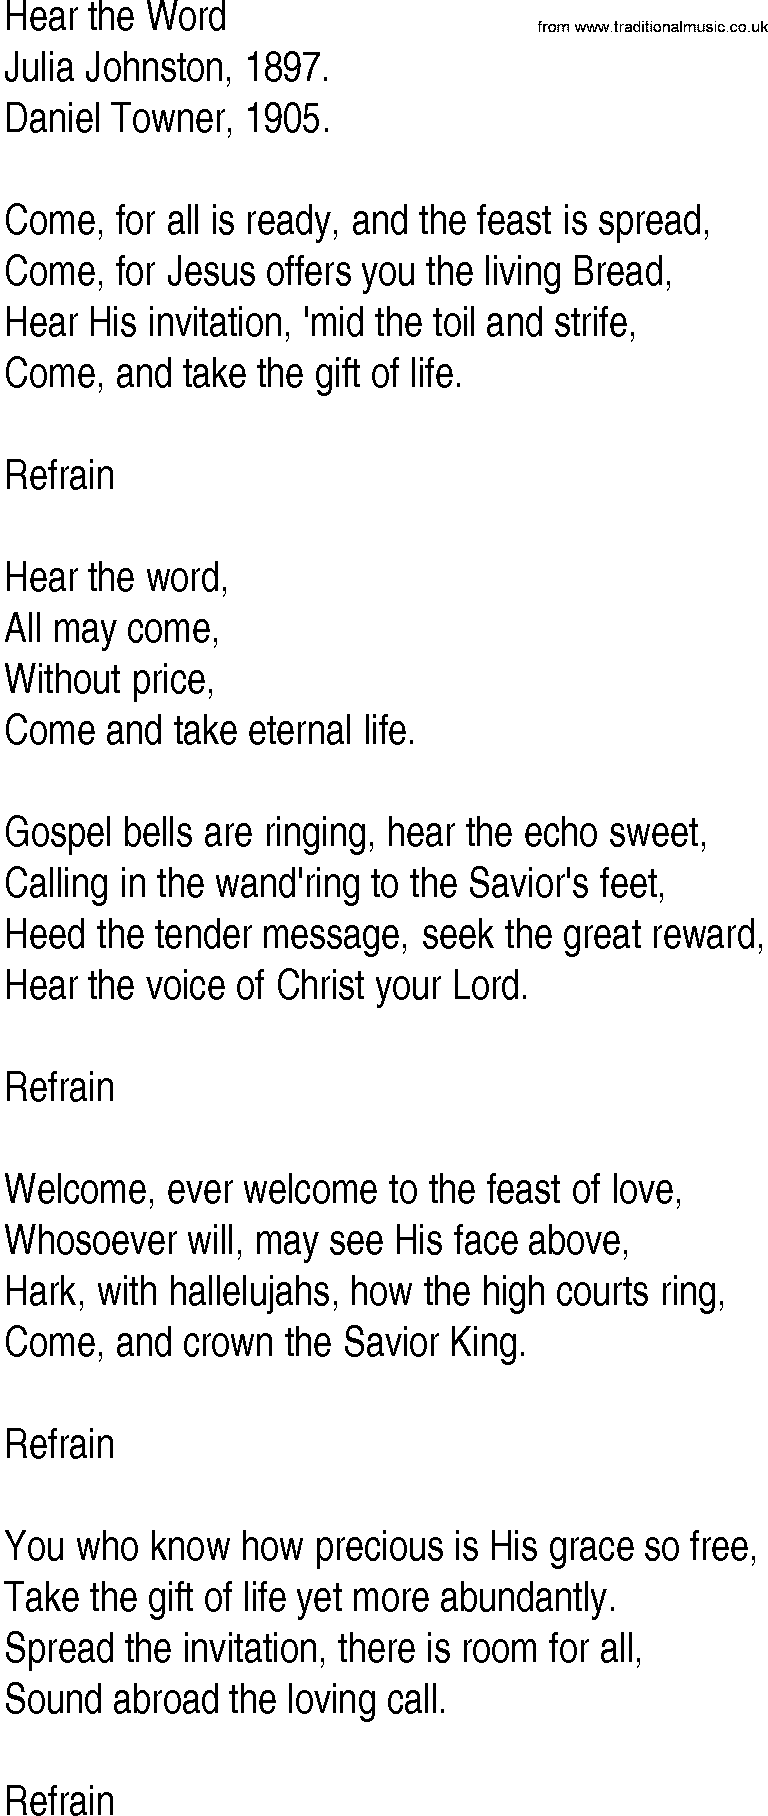 Hymn and Gospel Song: Hear the Word by Julia Johnston lyrics